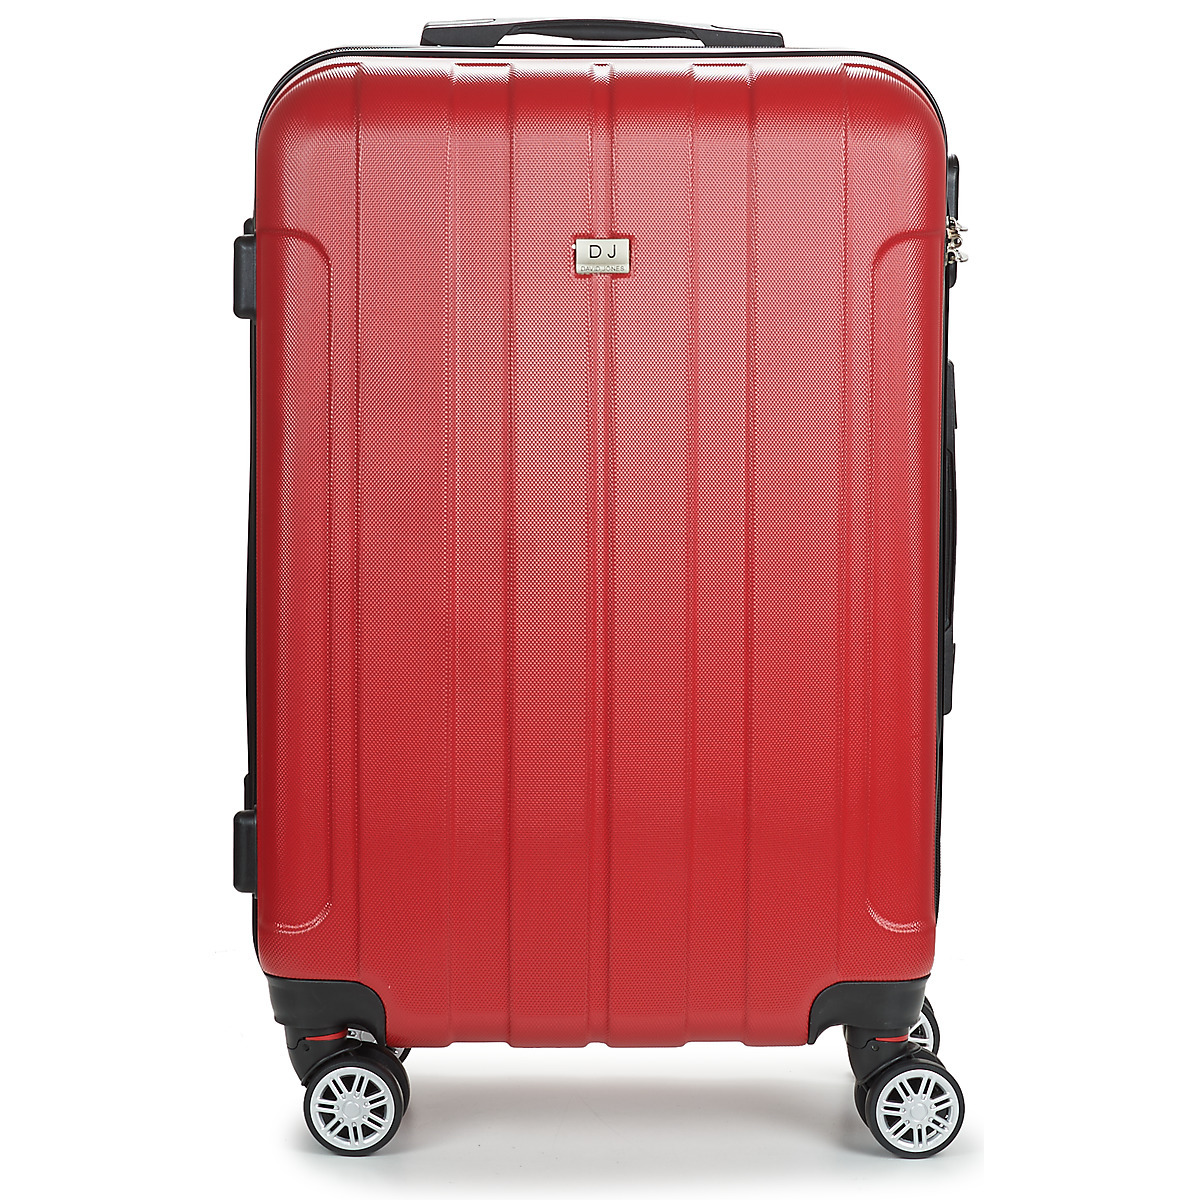 David Jones - Women's Luggage in Red - Spartoo GOOFASH